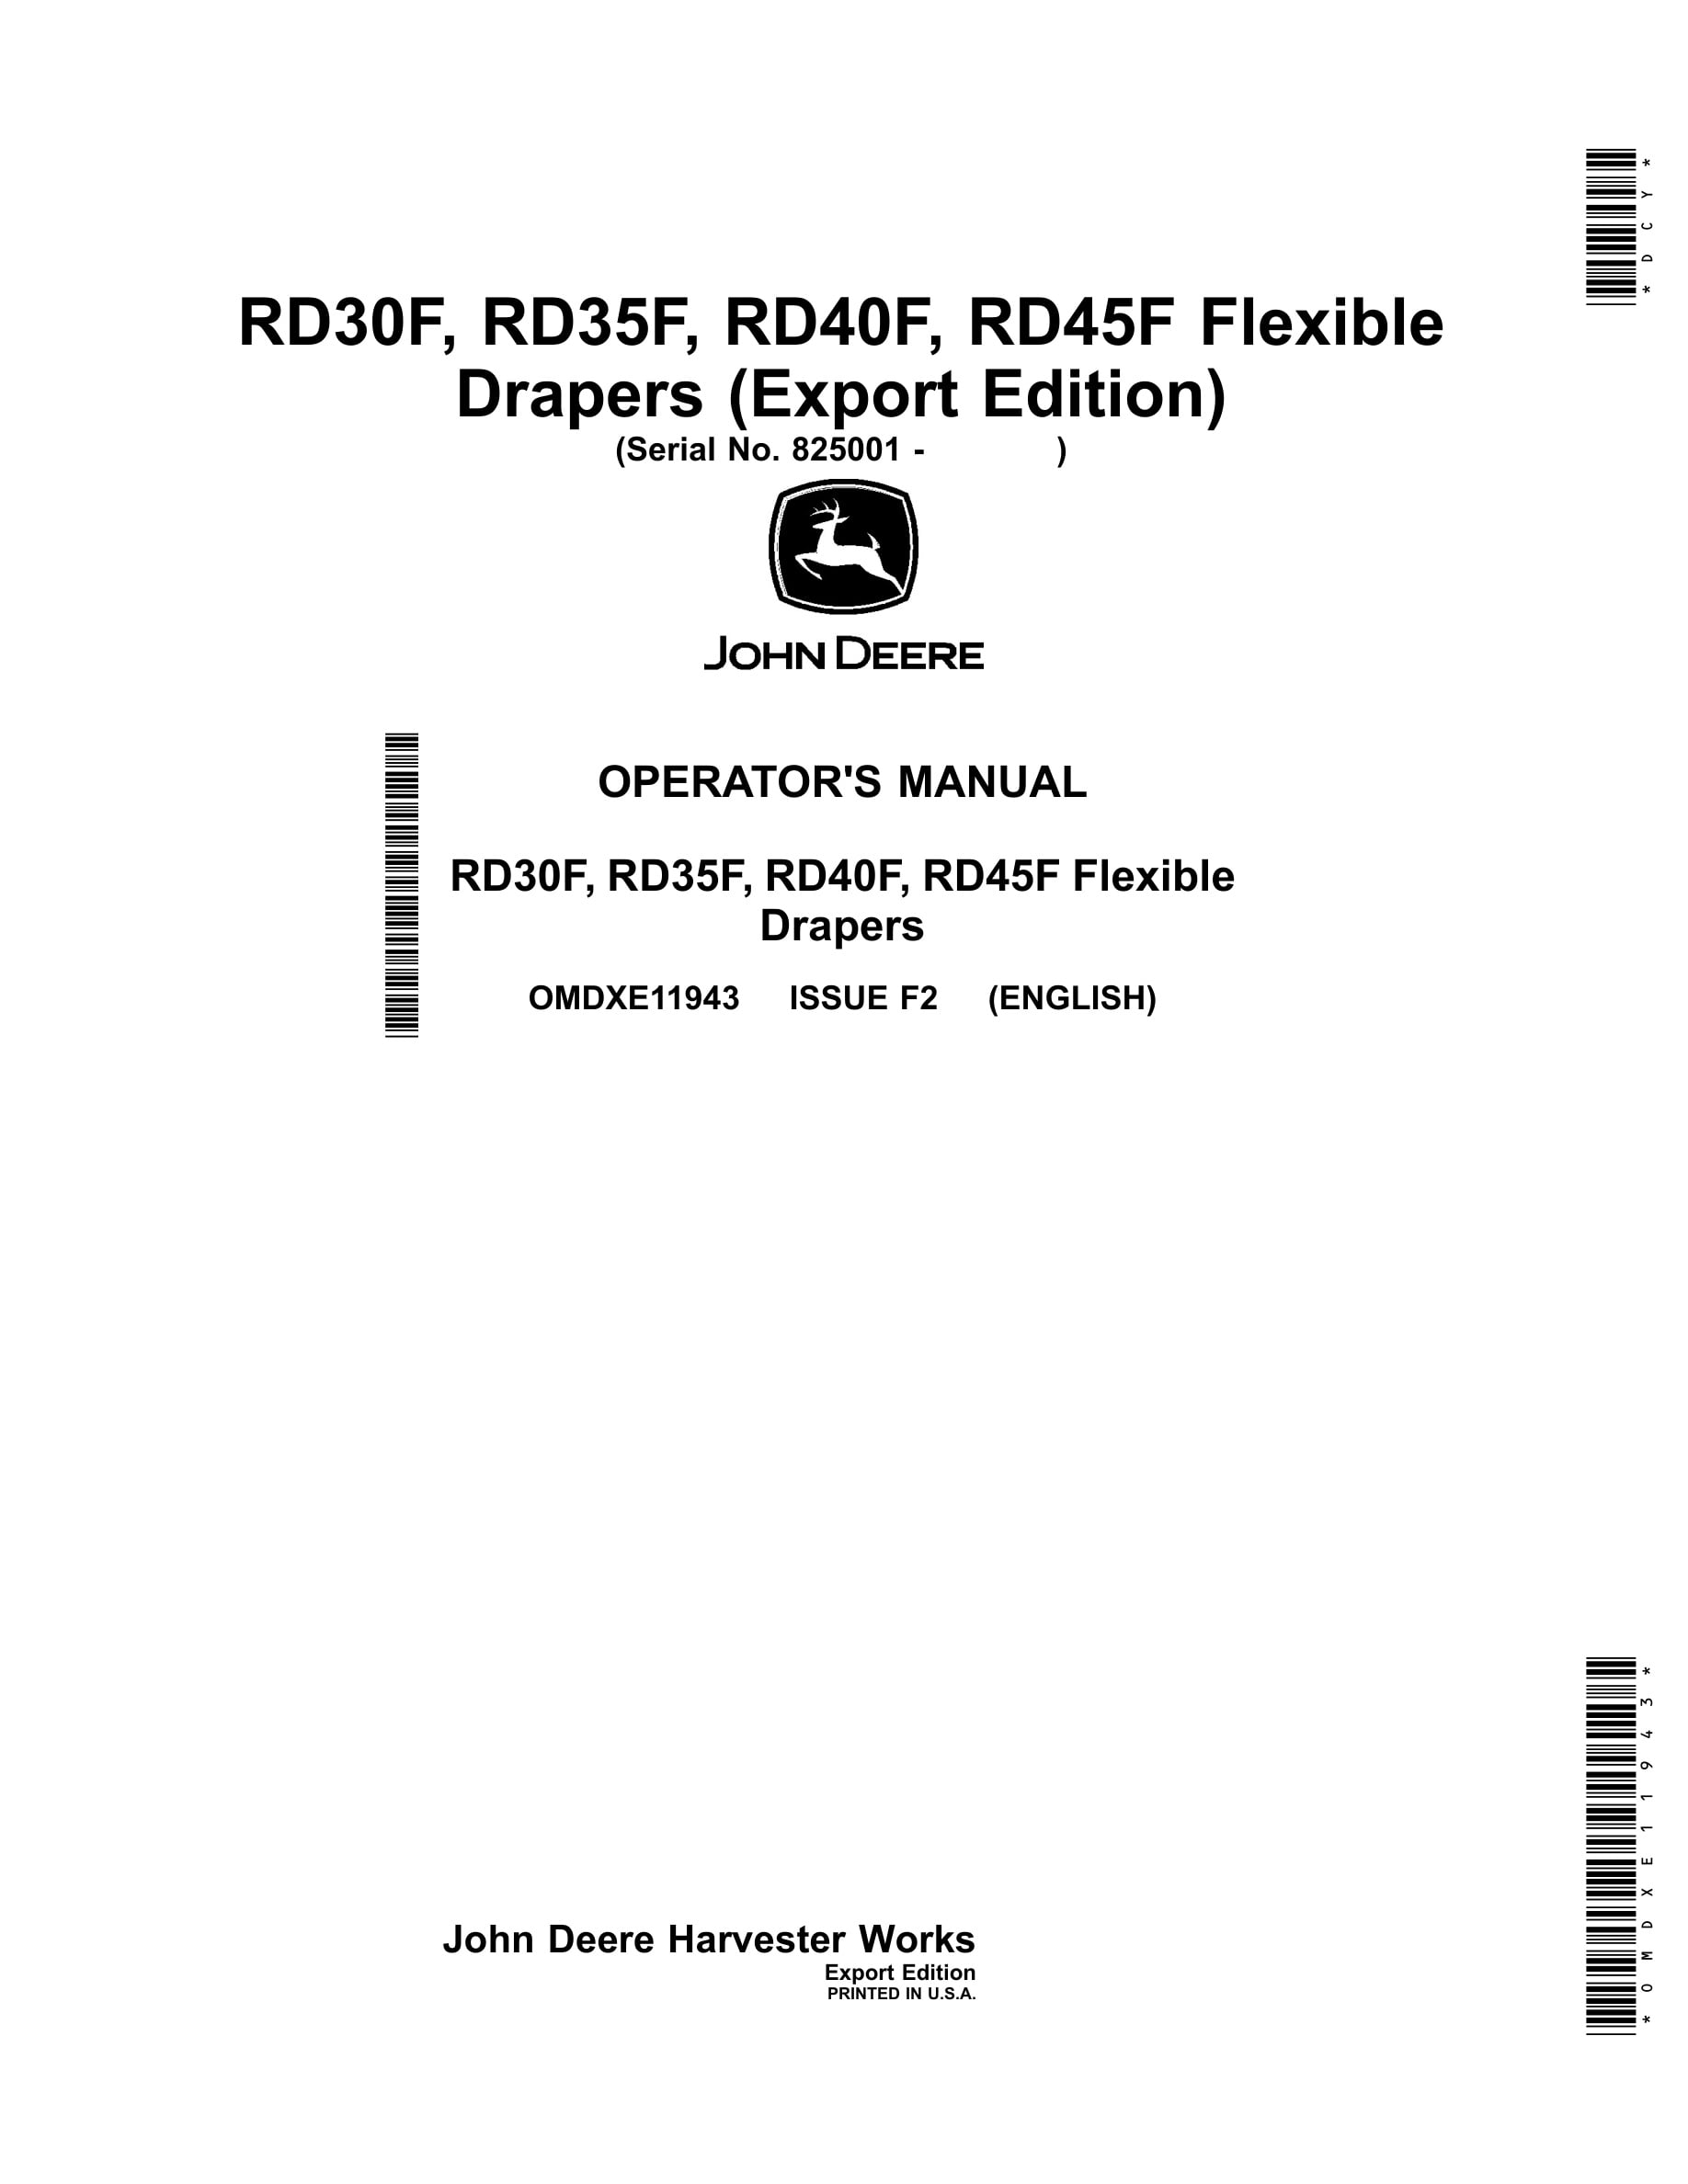 John Deere RD30F, RD35F, RD40F, RD45F Flexible Drapers Operator Manual OMDXE11943-1